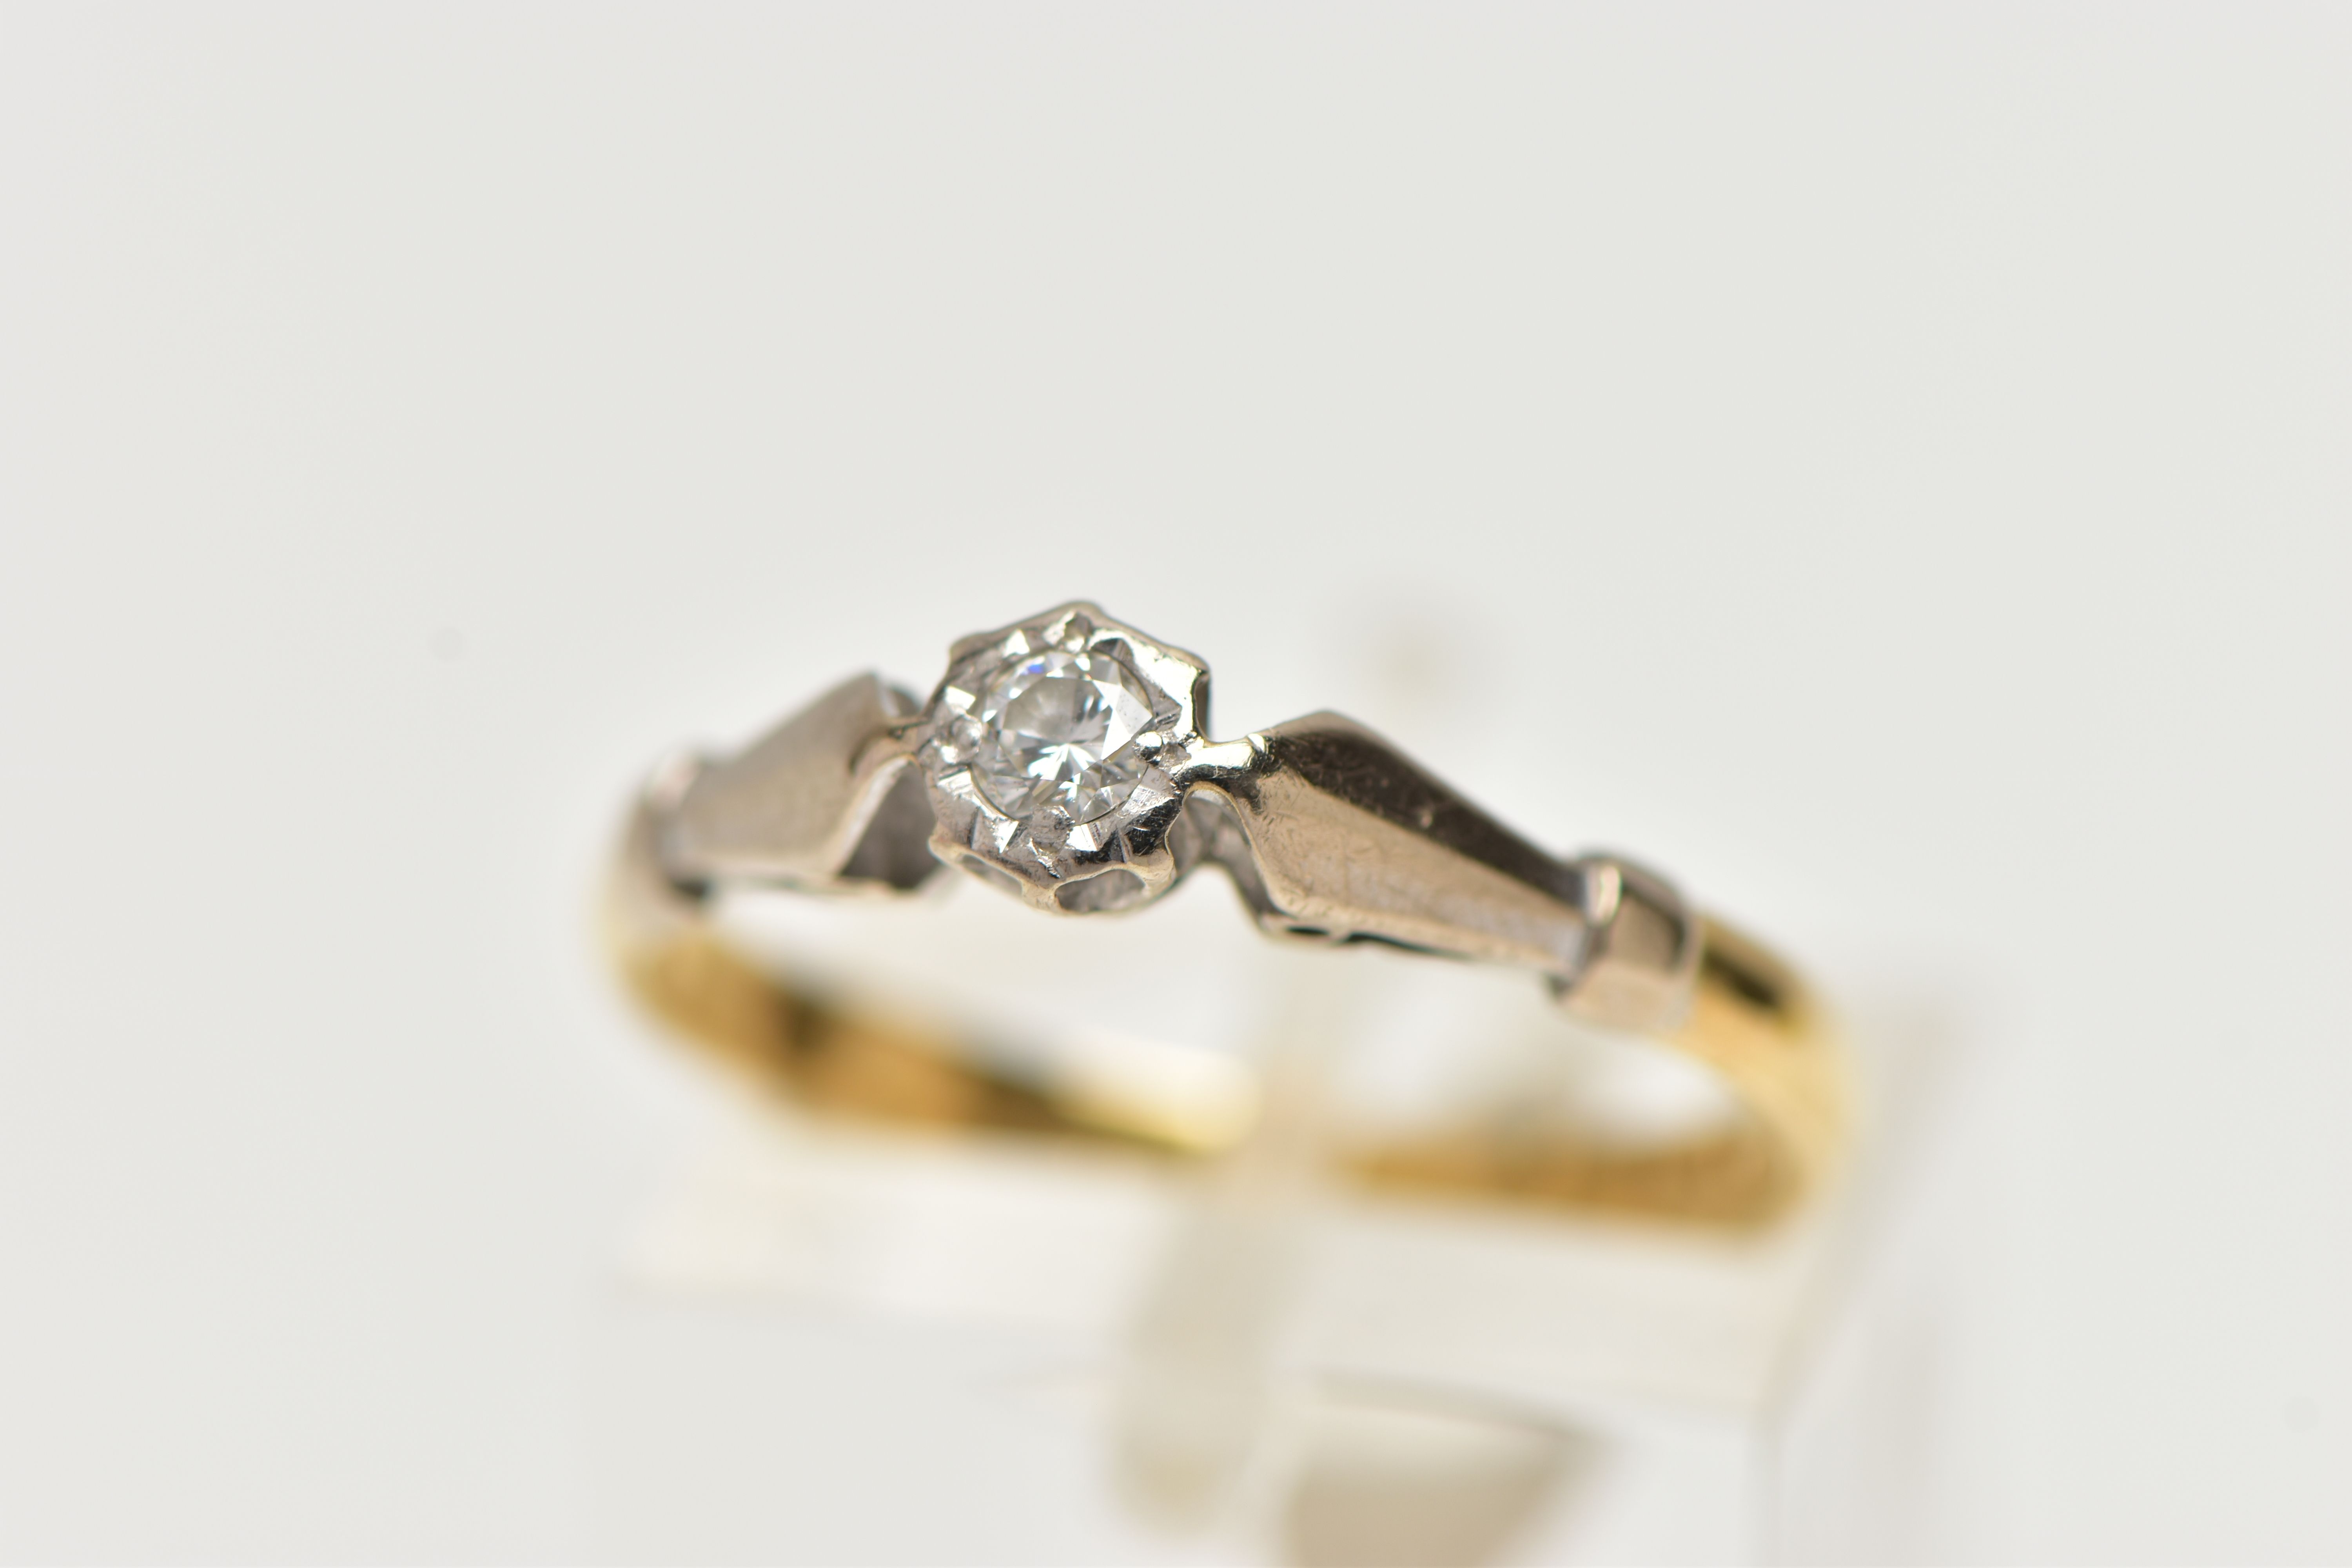 AN 18CT GOLD, SINGLE STONE DIAMOND RING, a round brilliant cut diamond set in a white metal illusion